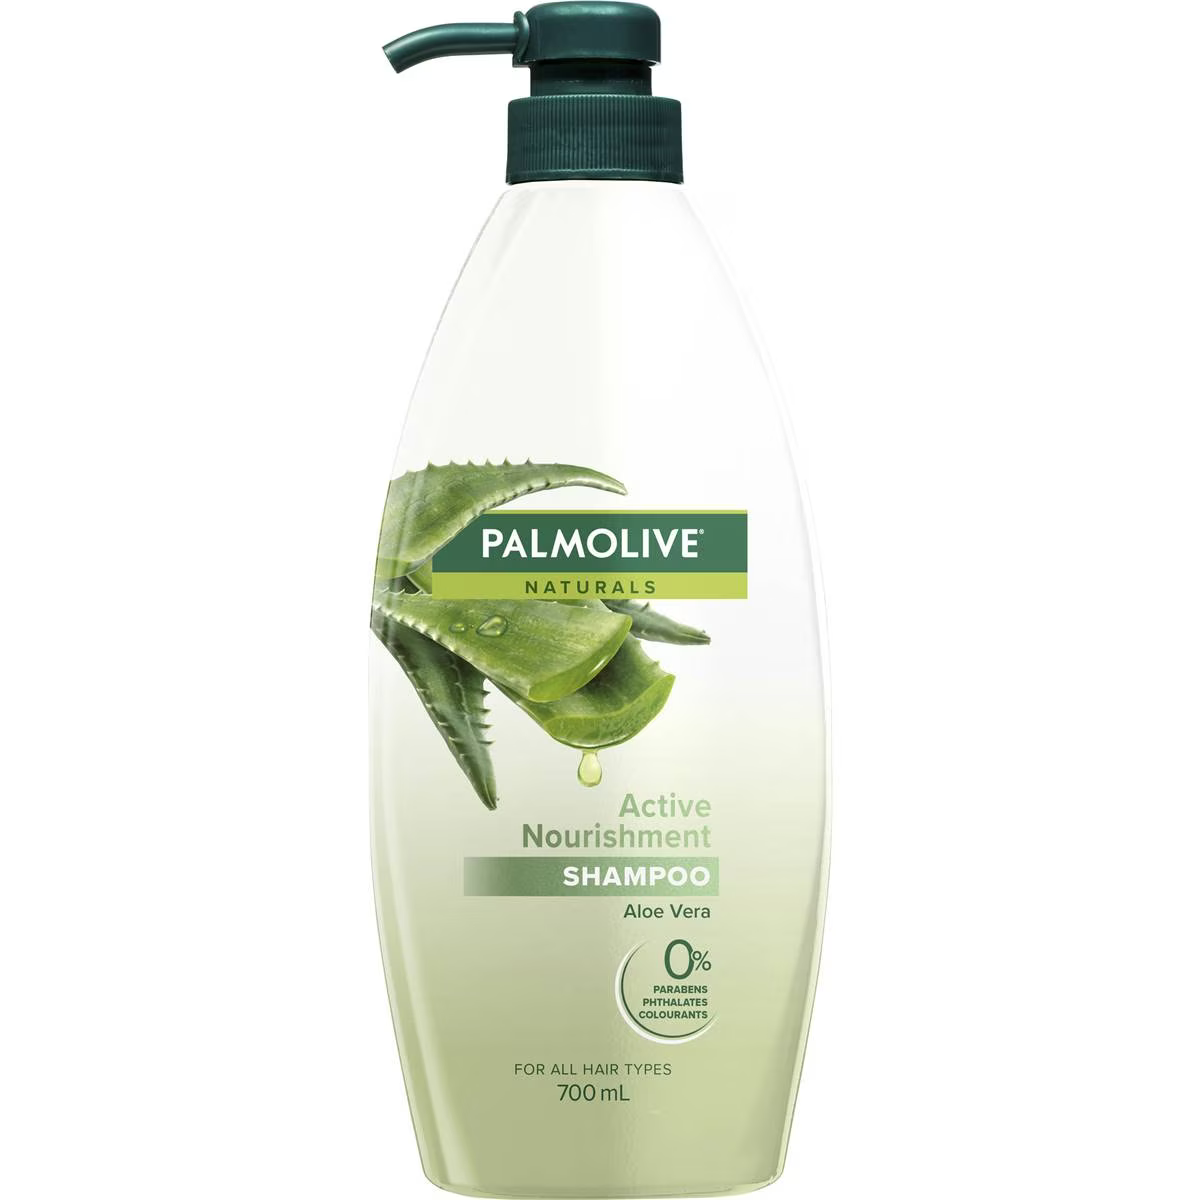 Palmolive Naturals Hair Shampoo Active Nourishment Aloe Vera 700ml